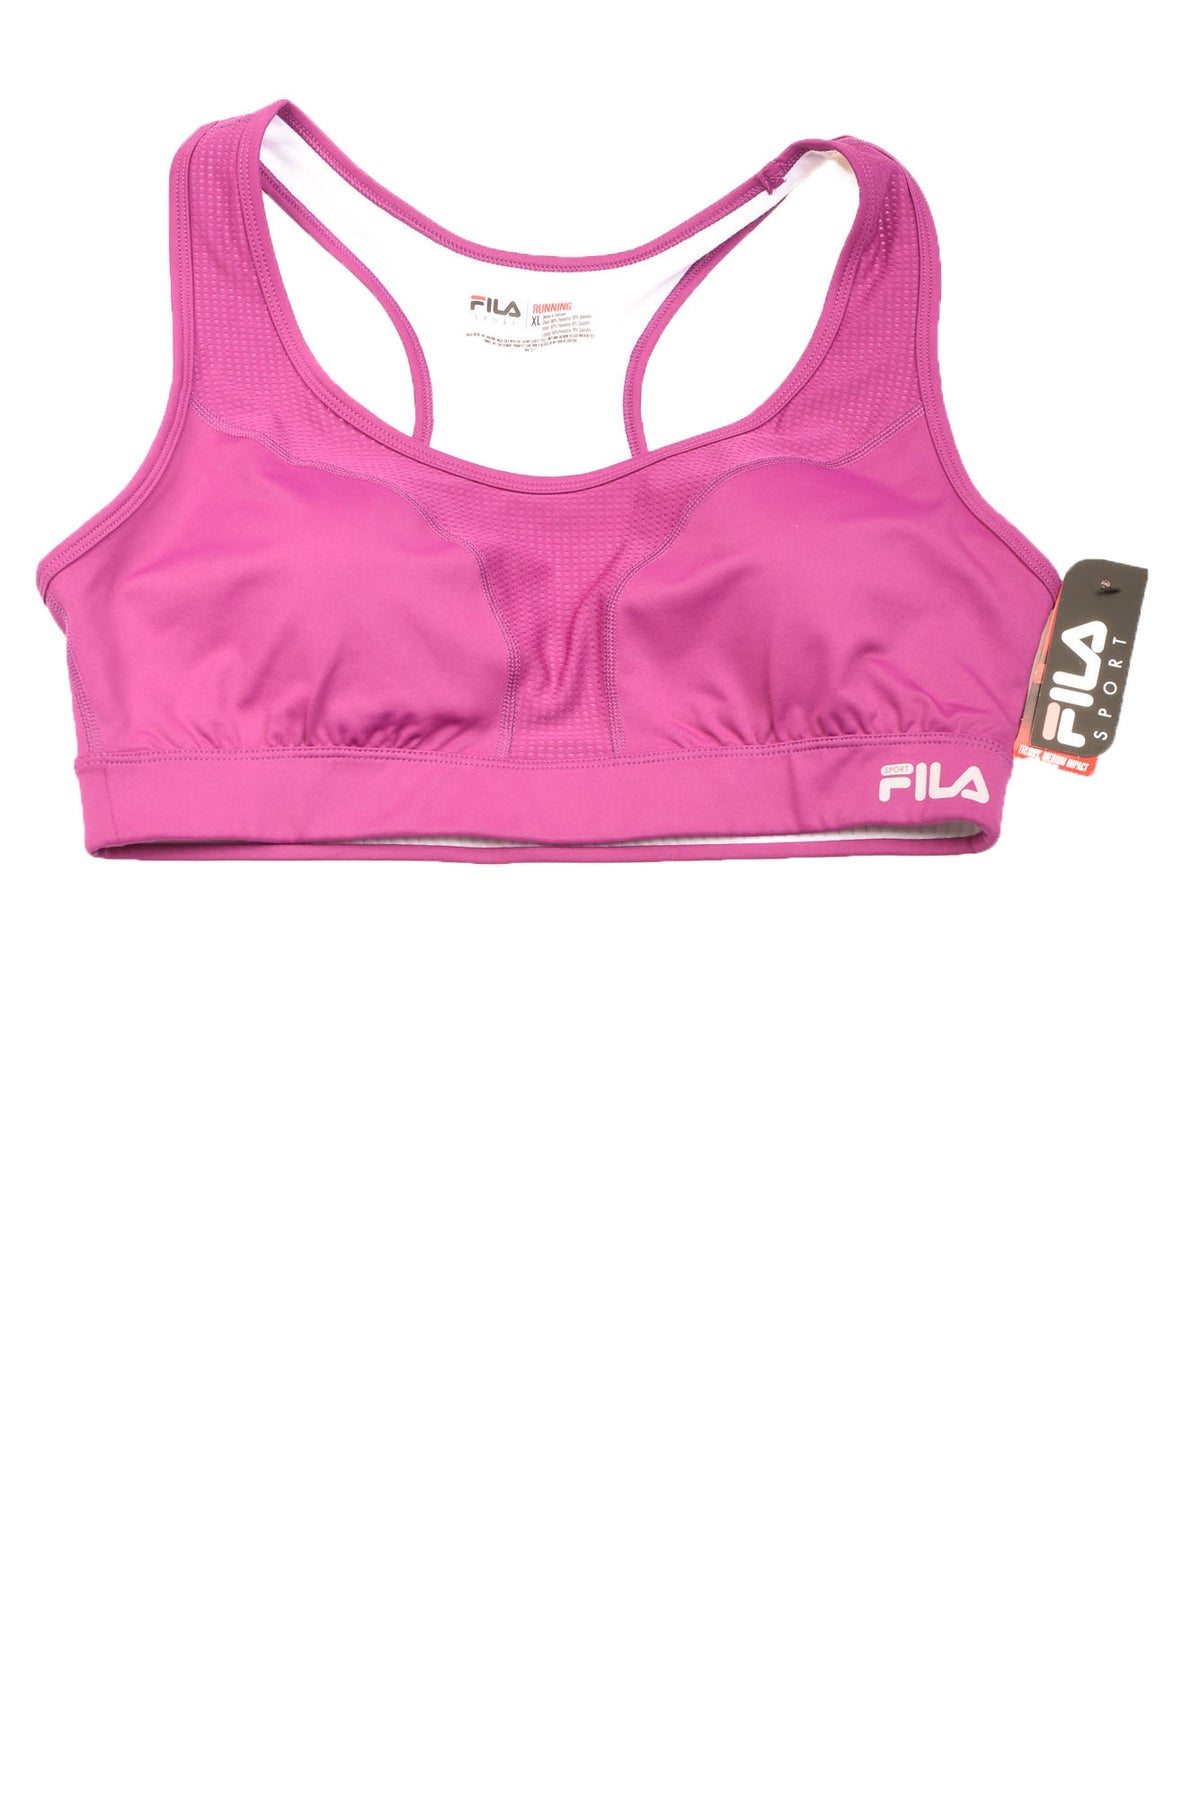 Fila Sport Size X-Large Women's Activewear Bra - Your Designer Thrift